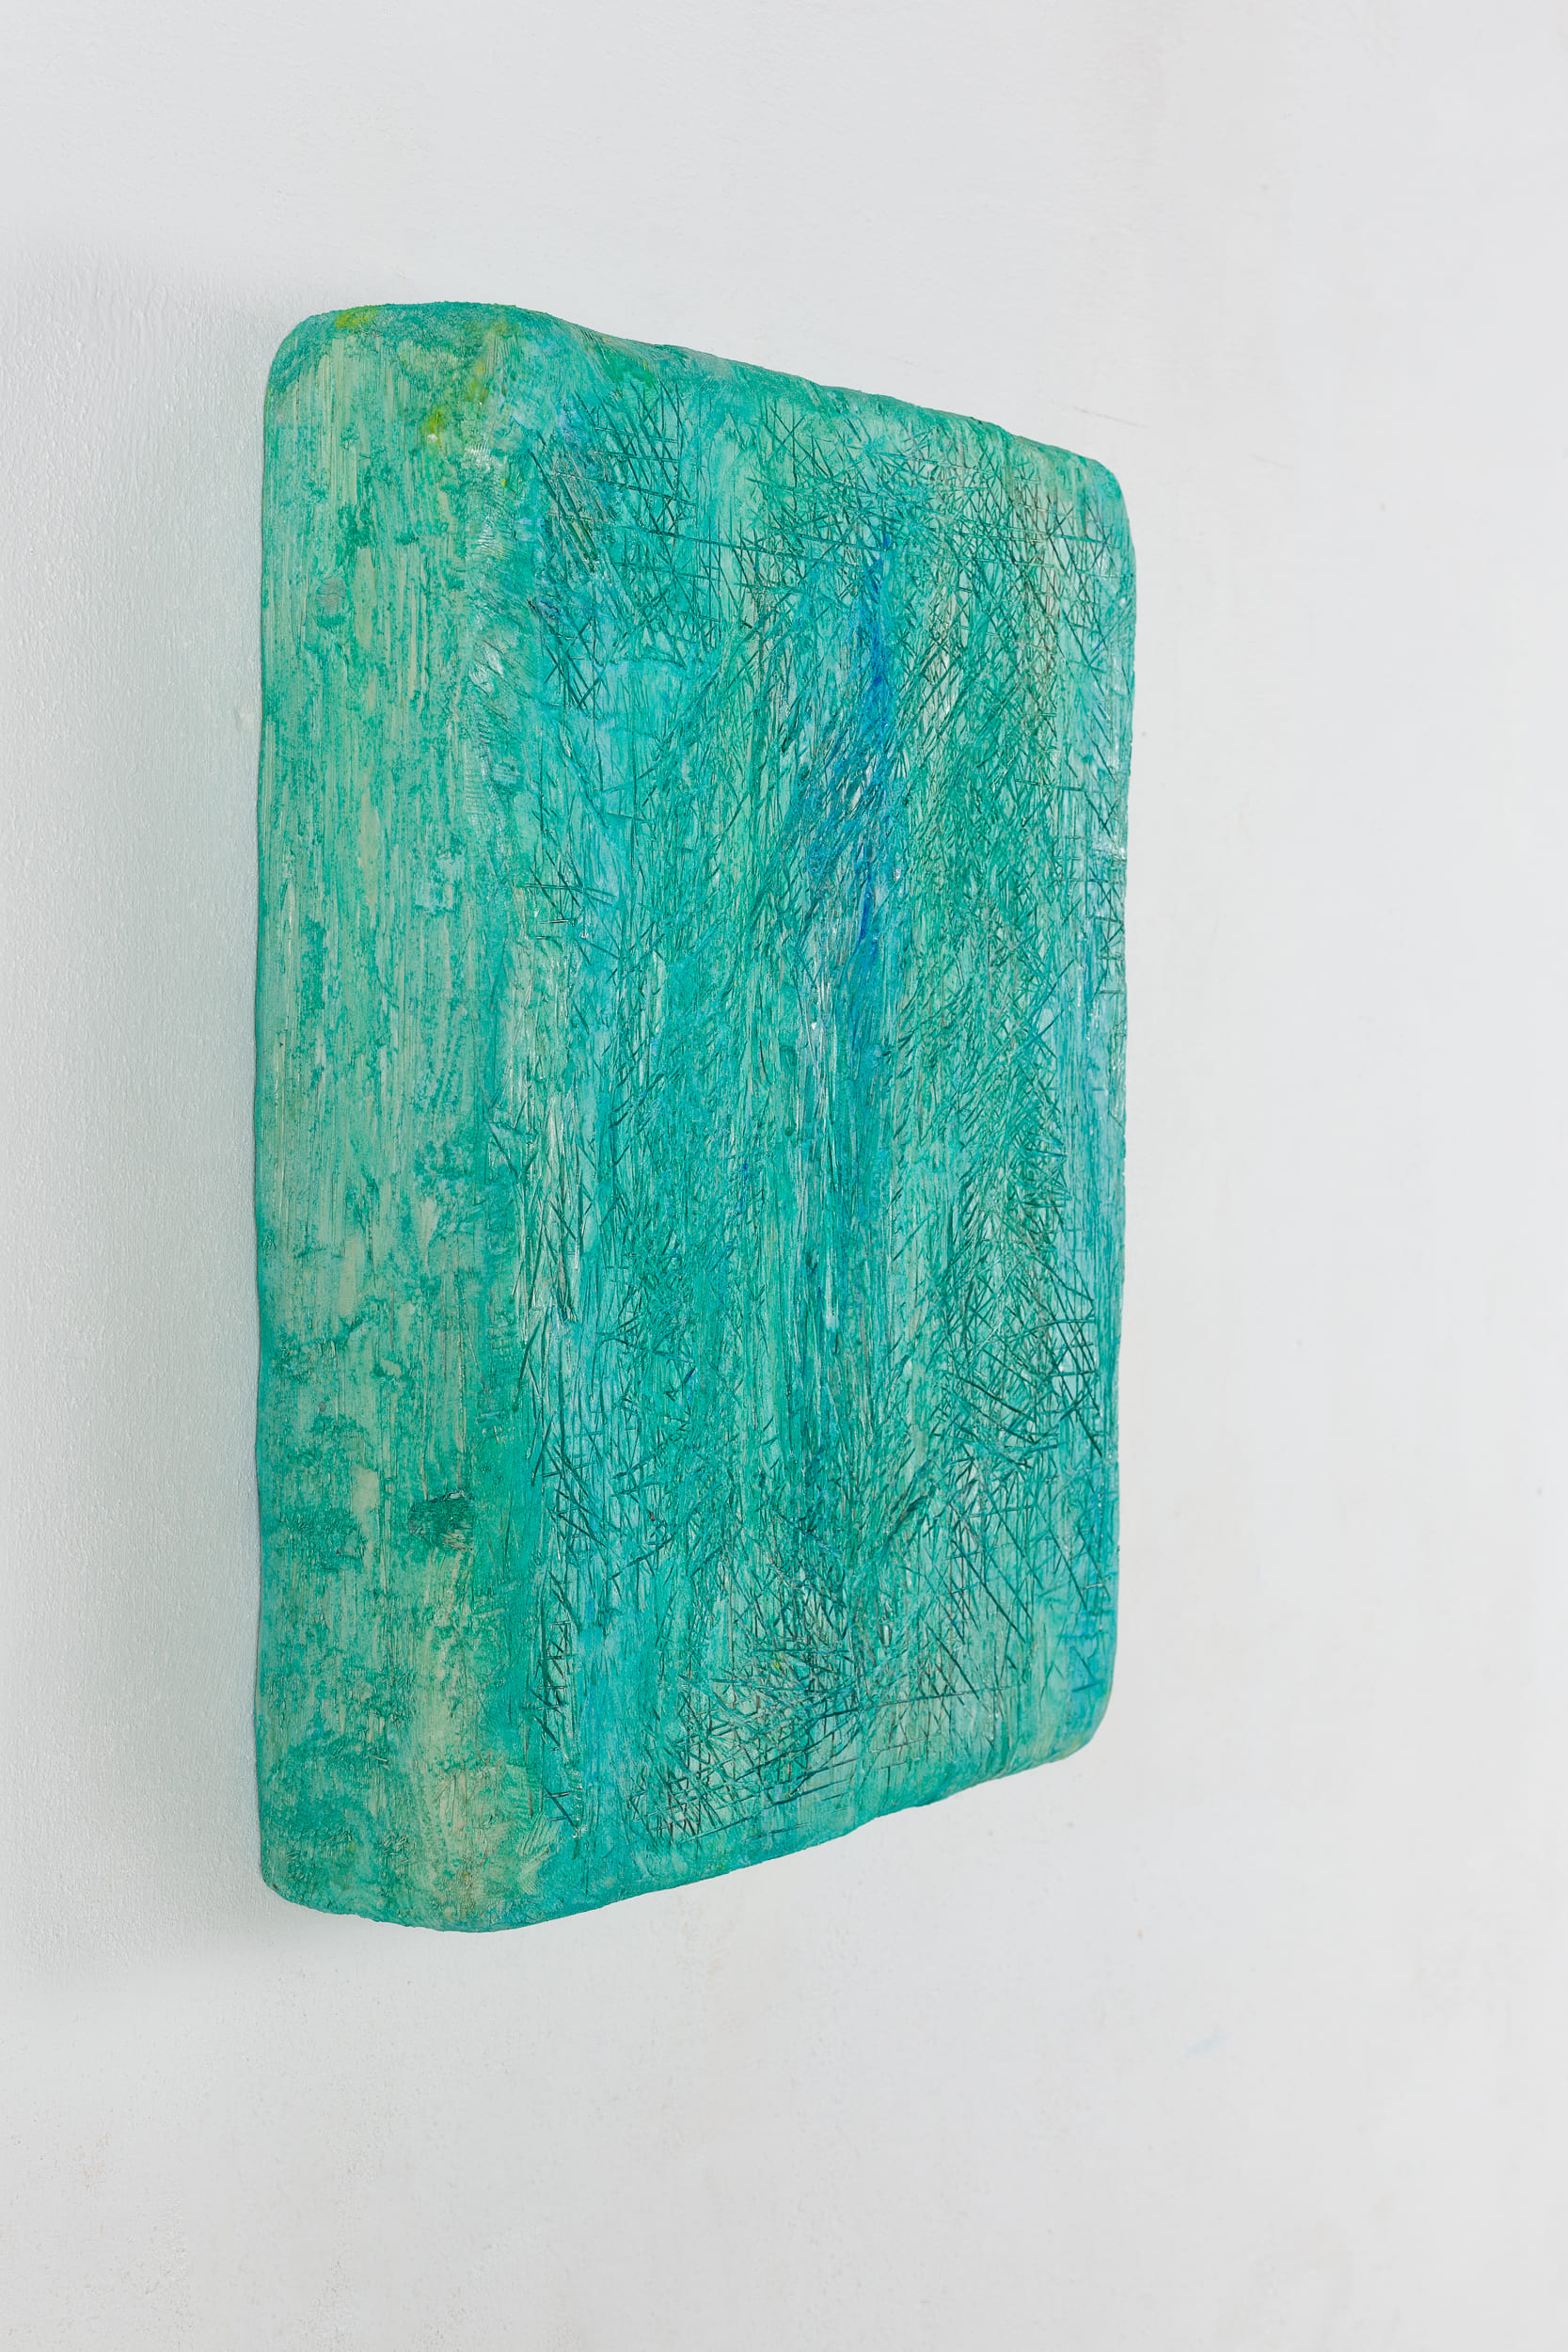 Wood N°3 (Green Blue)2 copy